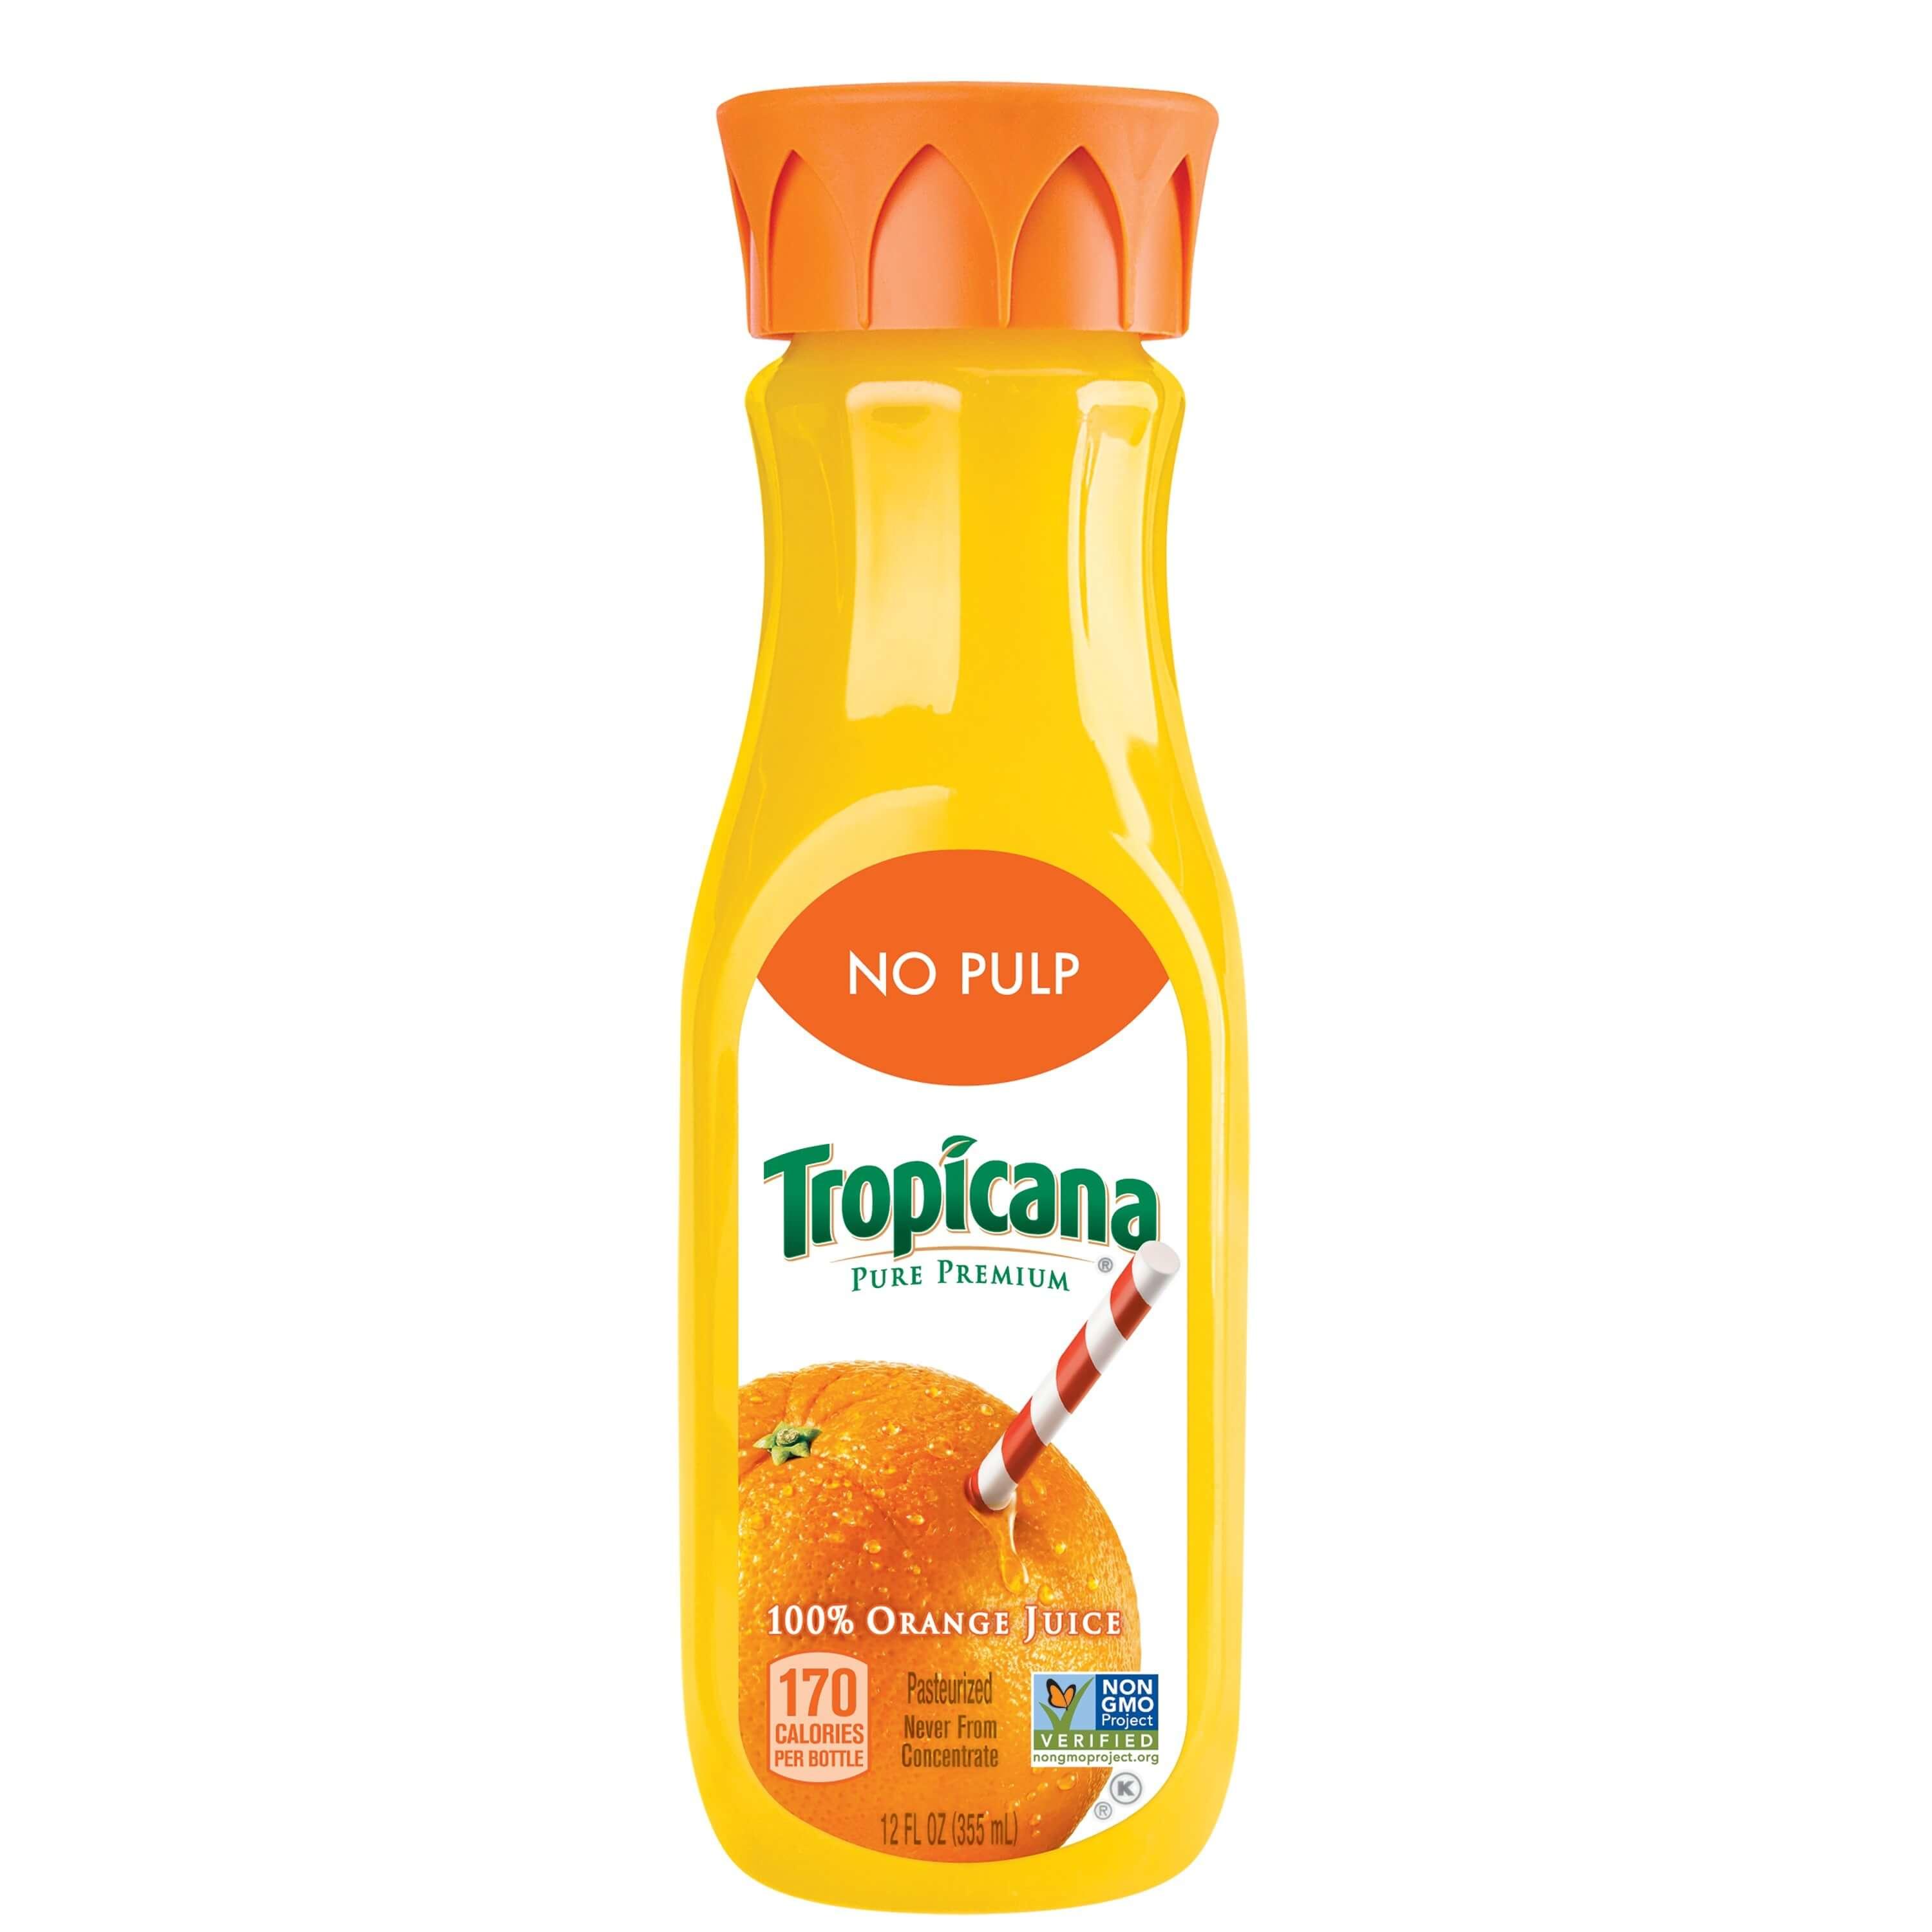 Tropicana - Original Pure Premium No Pulp Orange Juice 12oz